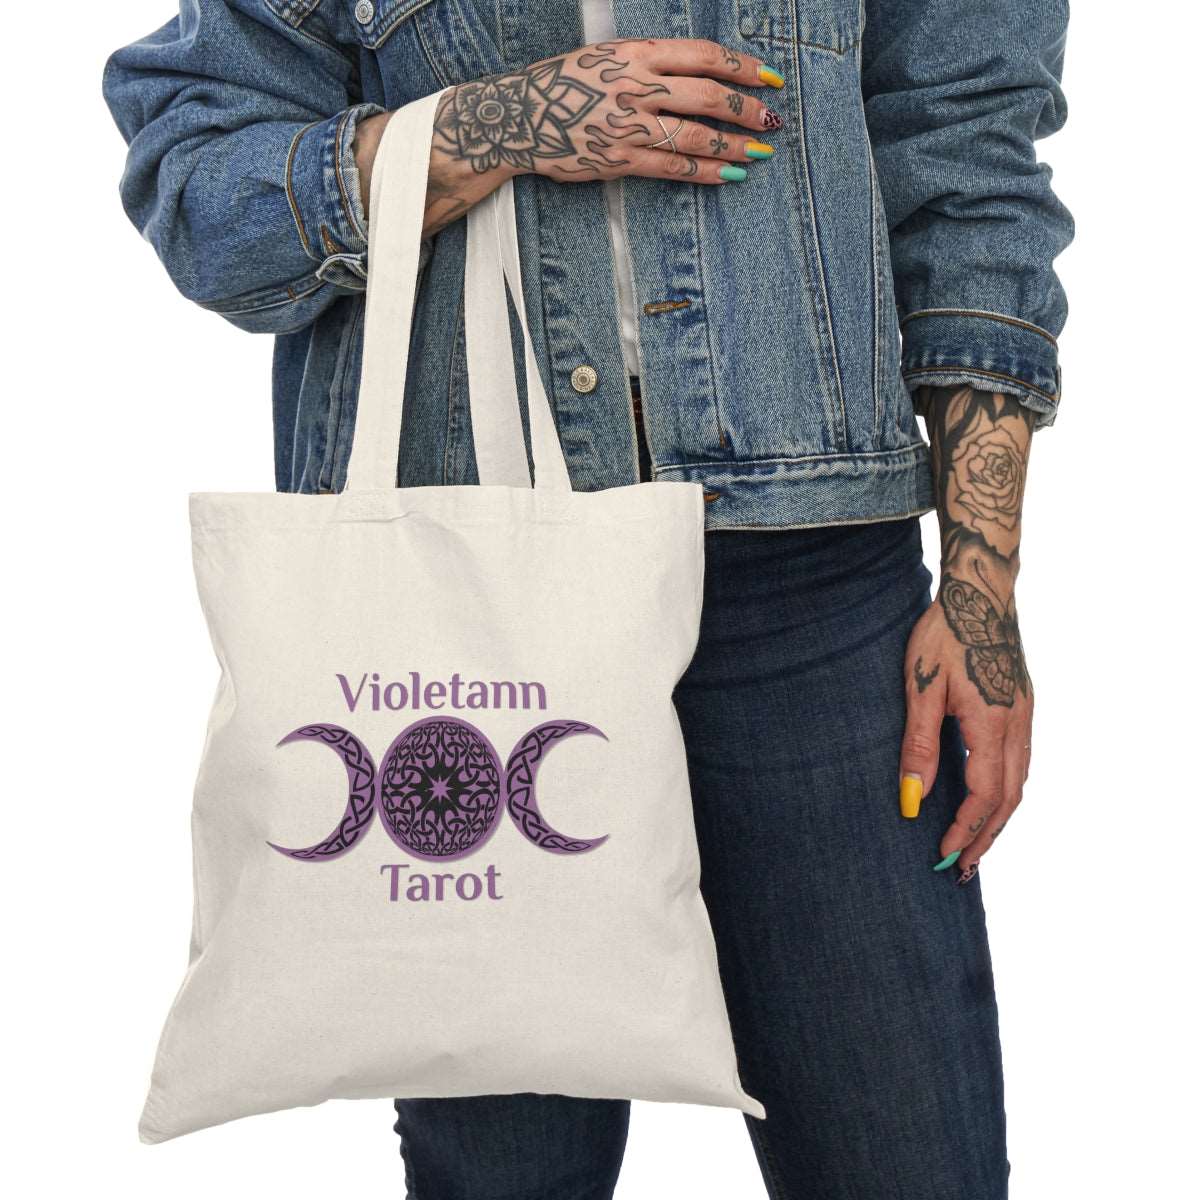 Violetann Tarot Logo - Natural Tote Bag